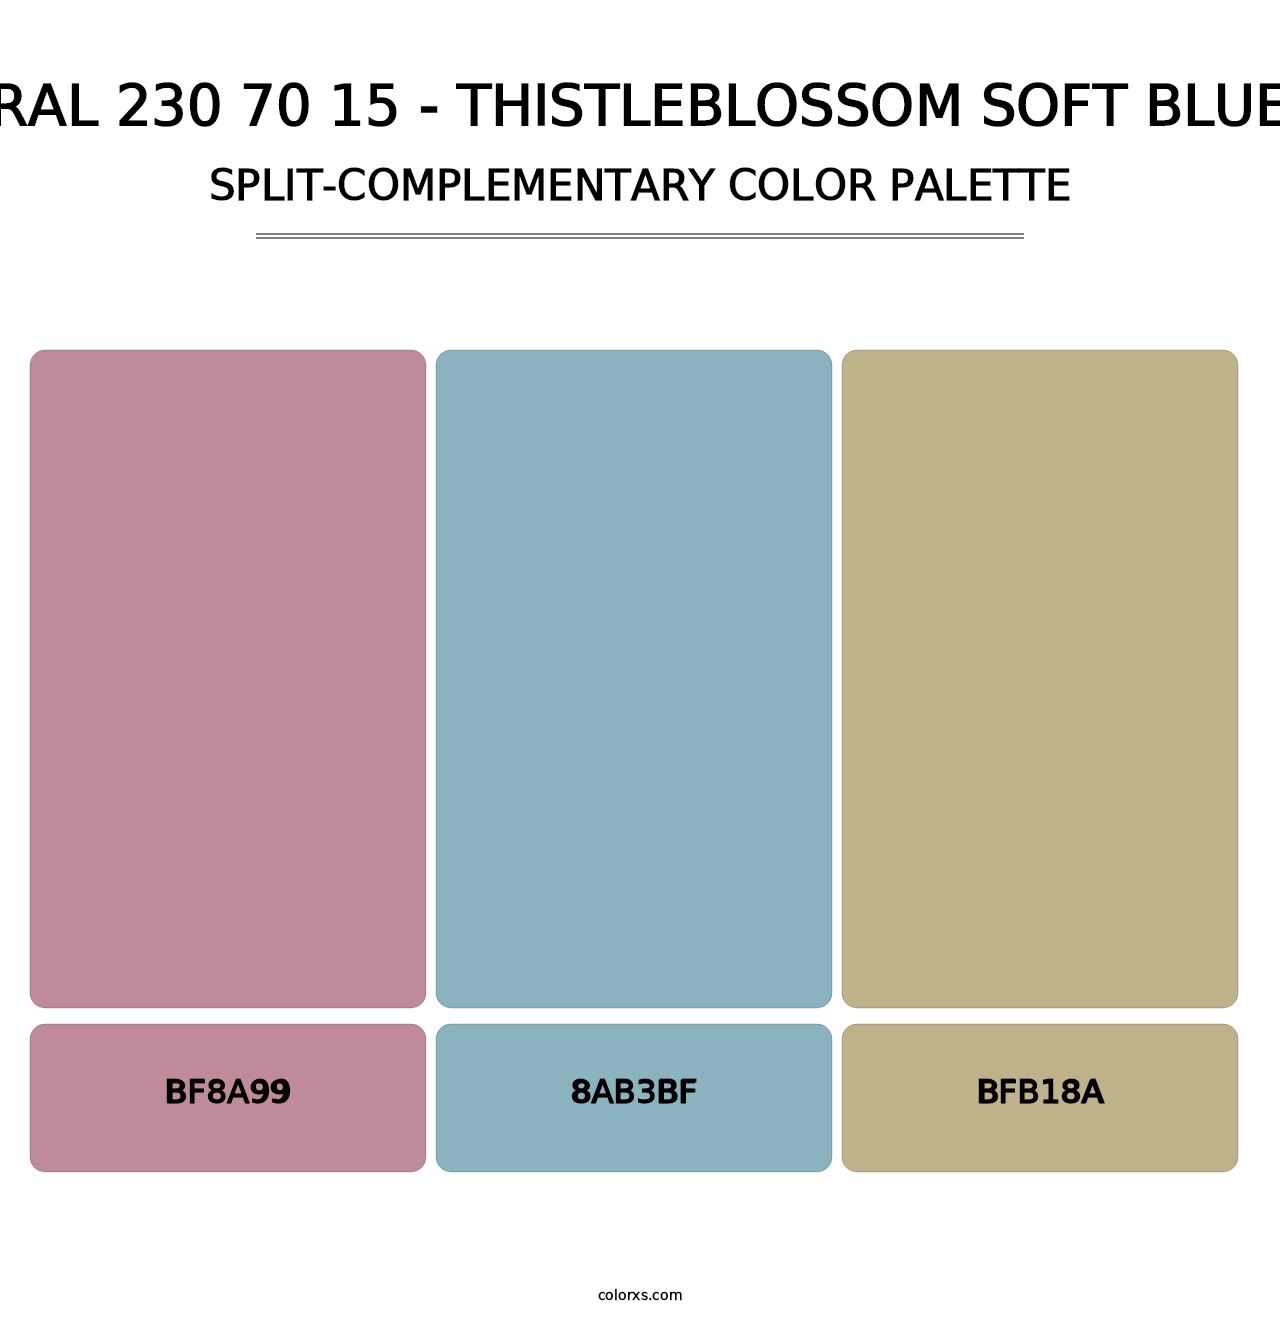 RAL 230 70 15 - Thistleblossom Soft Blue - Split-Complementary Color Palette